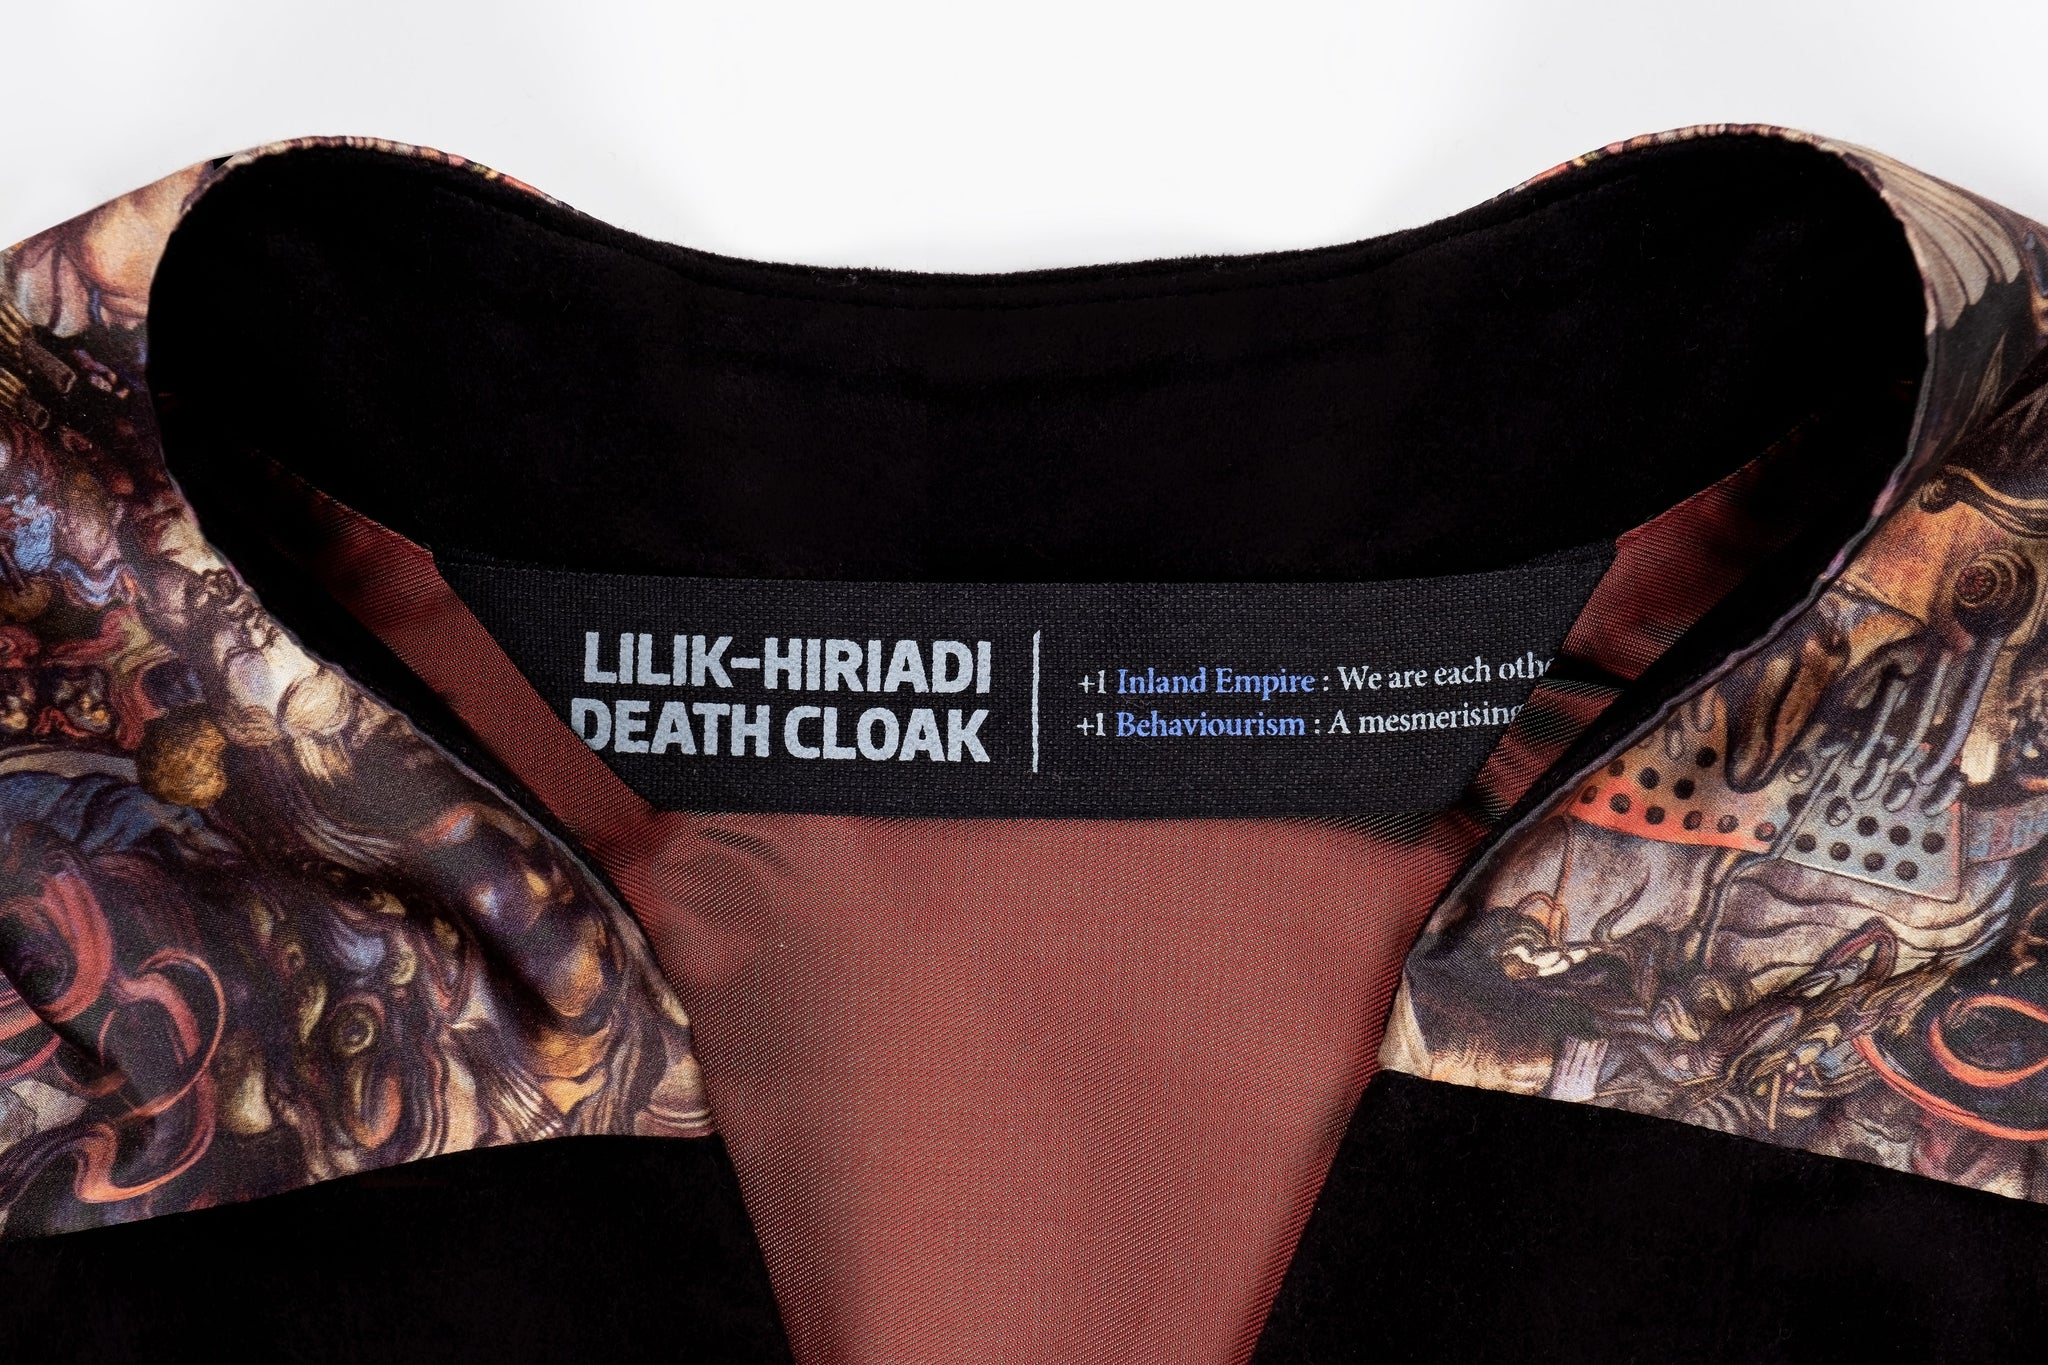 Lilik-hiriadi death cloak